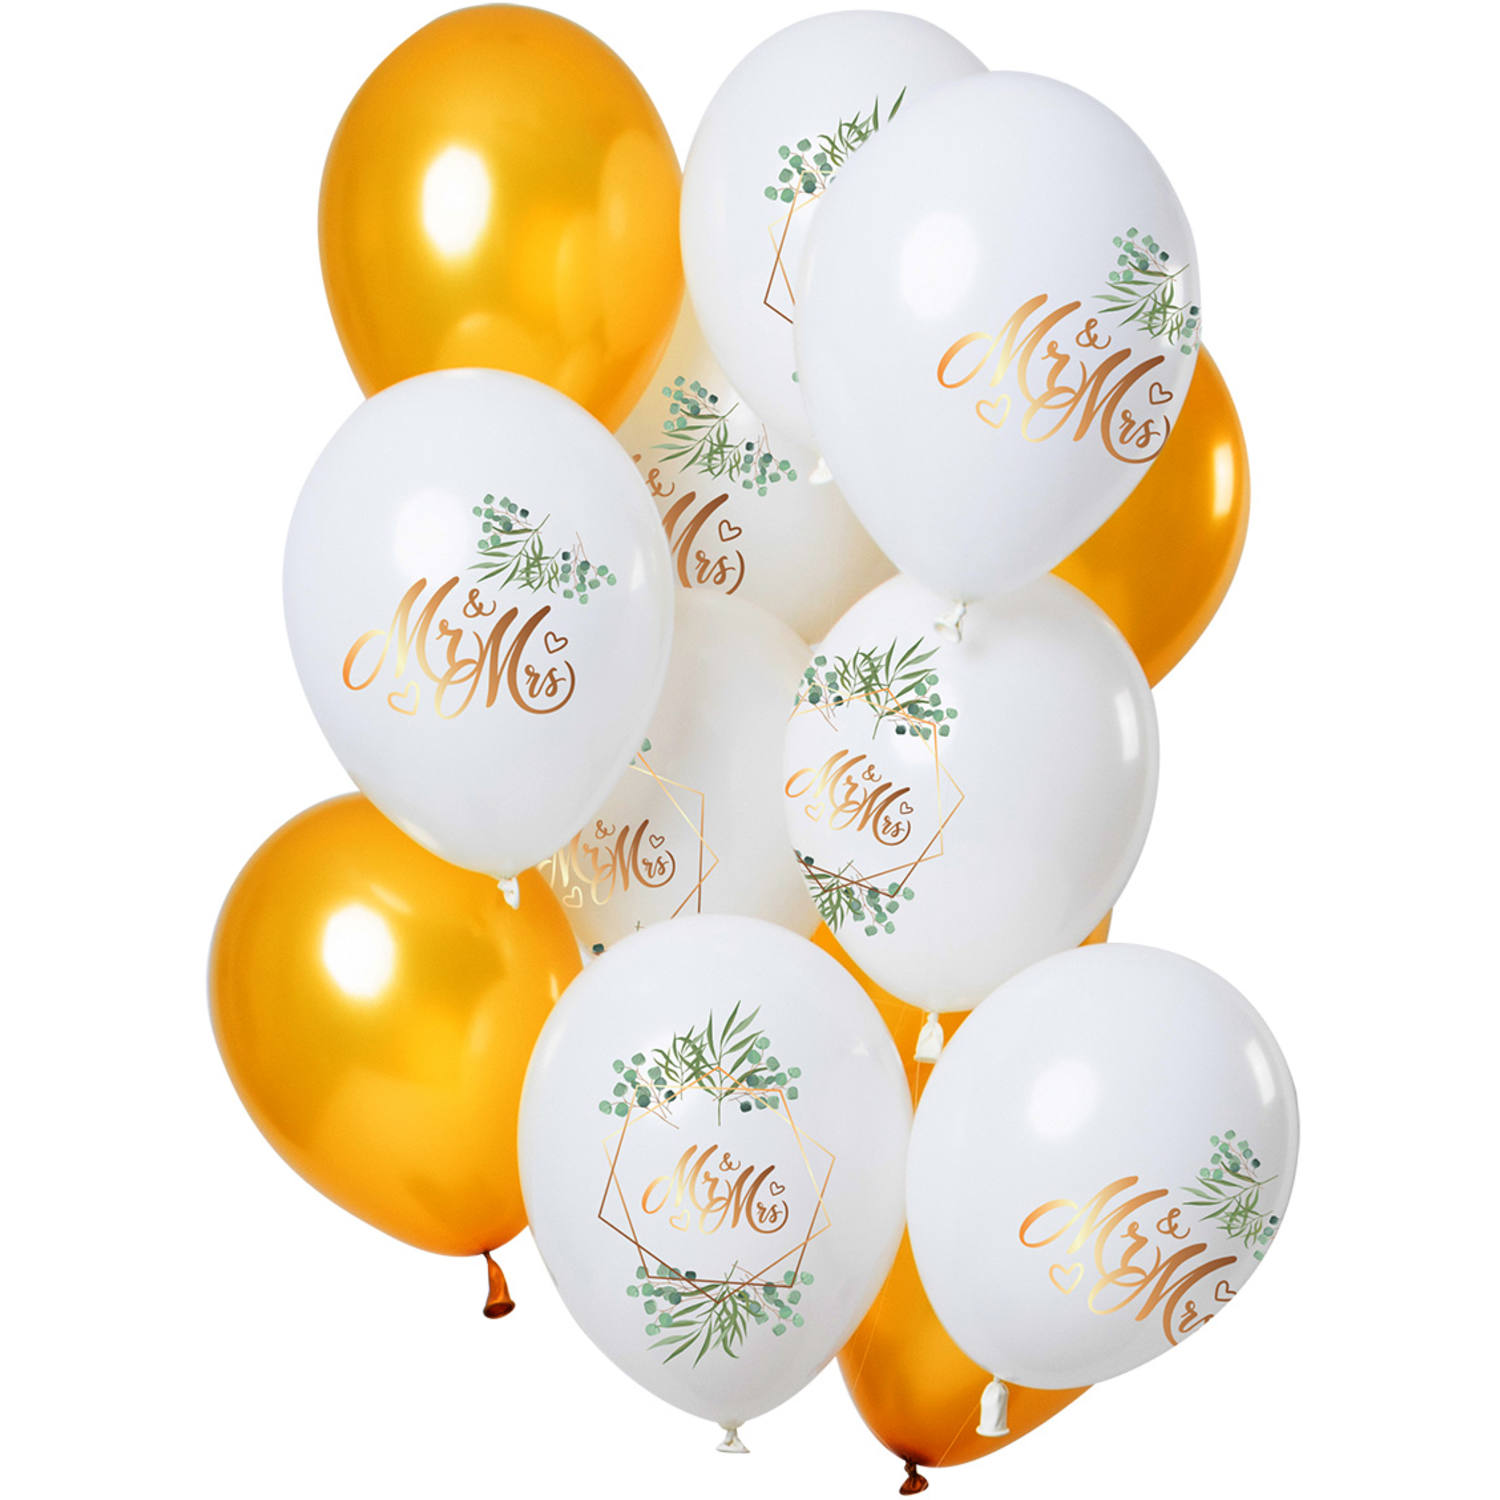 NEU Premium-Latex-Luftballons Mr. & Mrs, Gold, 33cm, 12 Stk.